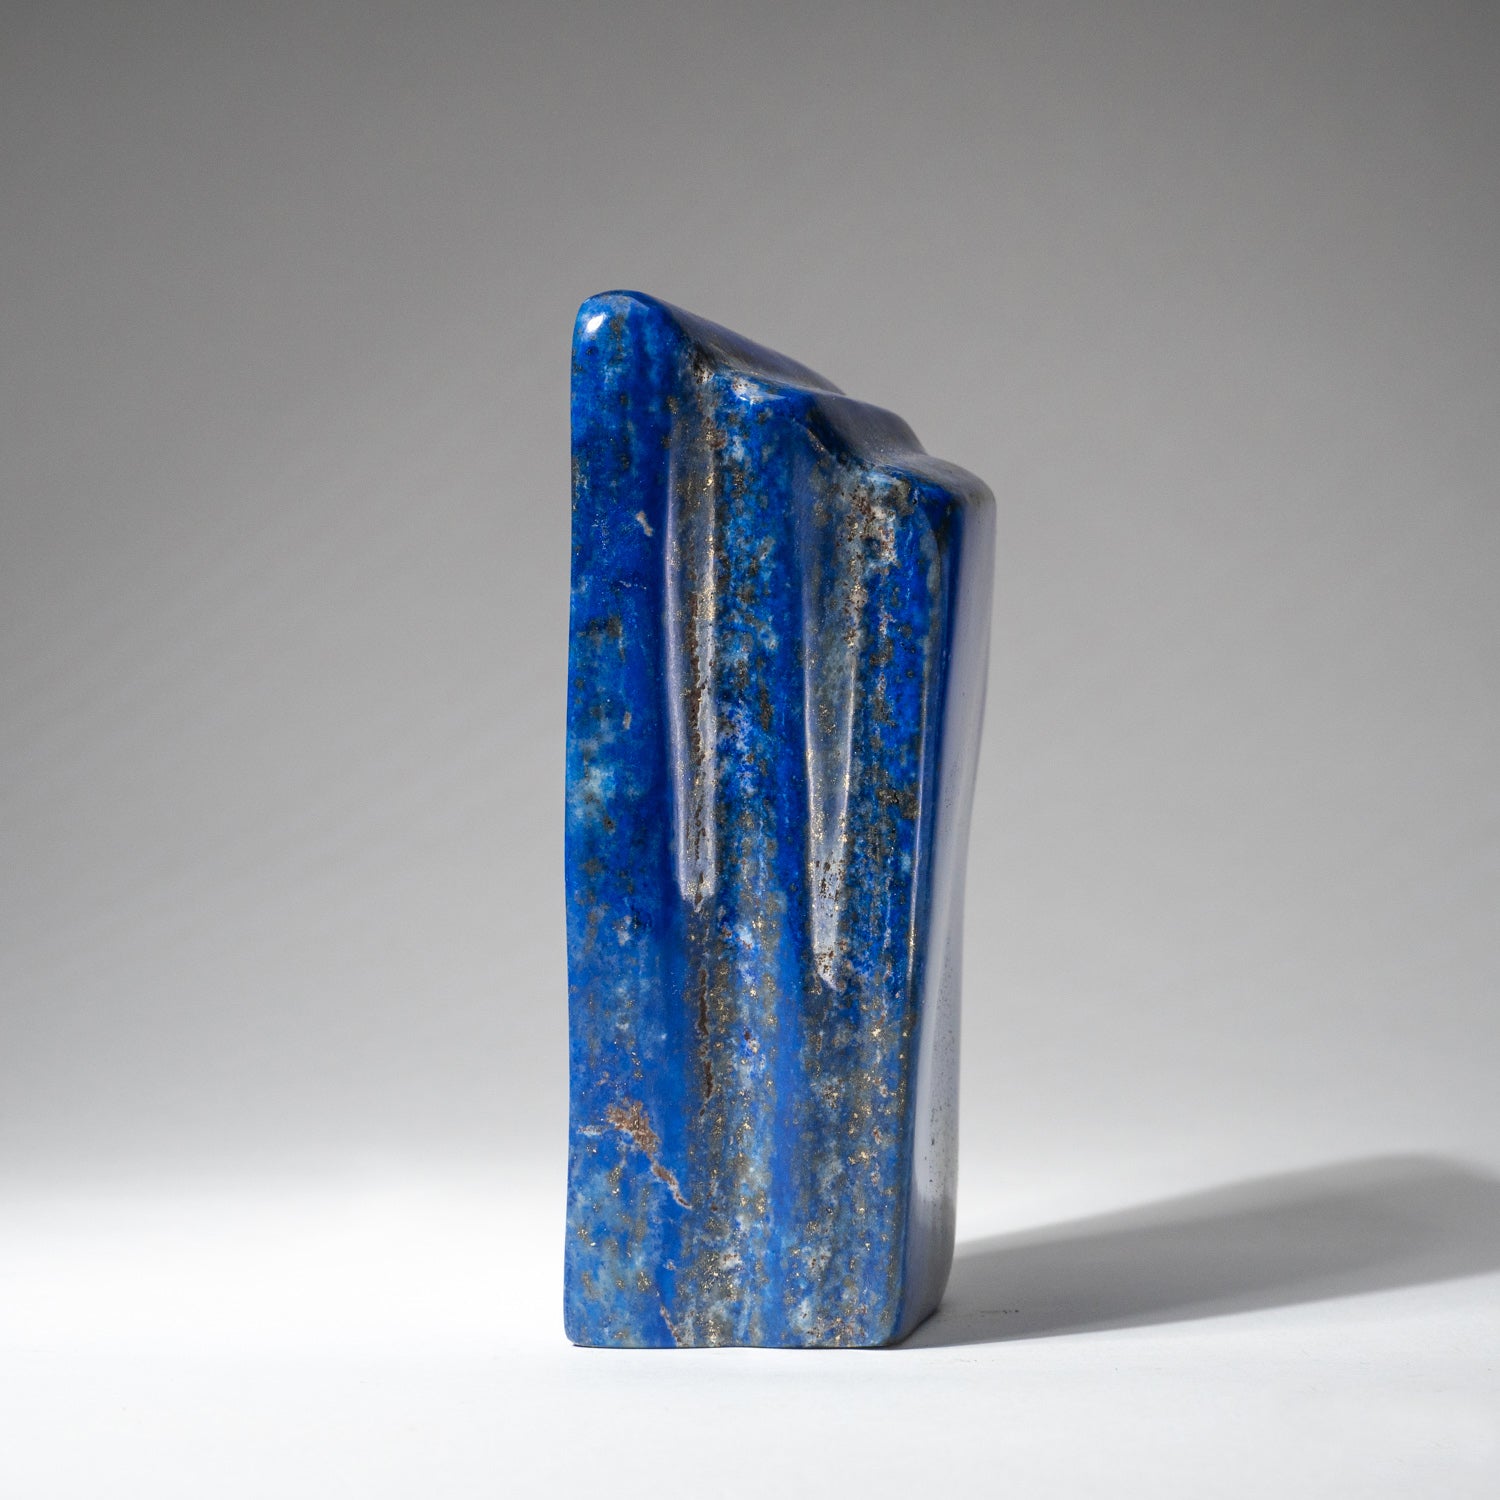 Polished Lapis Lazuli Freeform from Afghanistan (1.9 lbs)